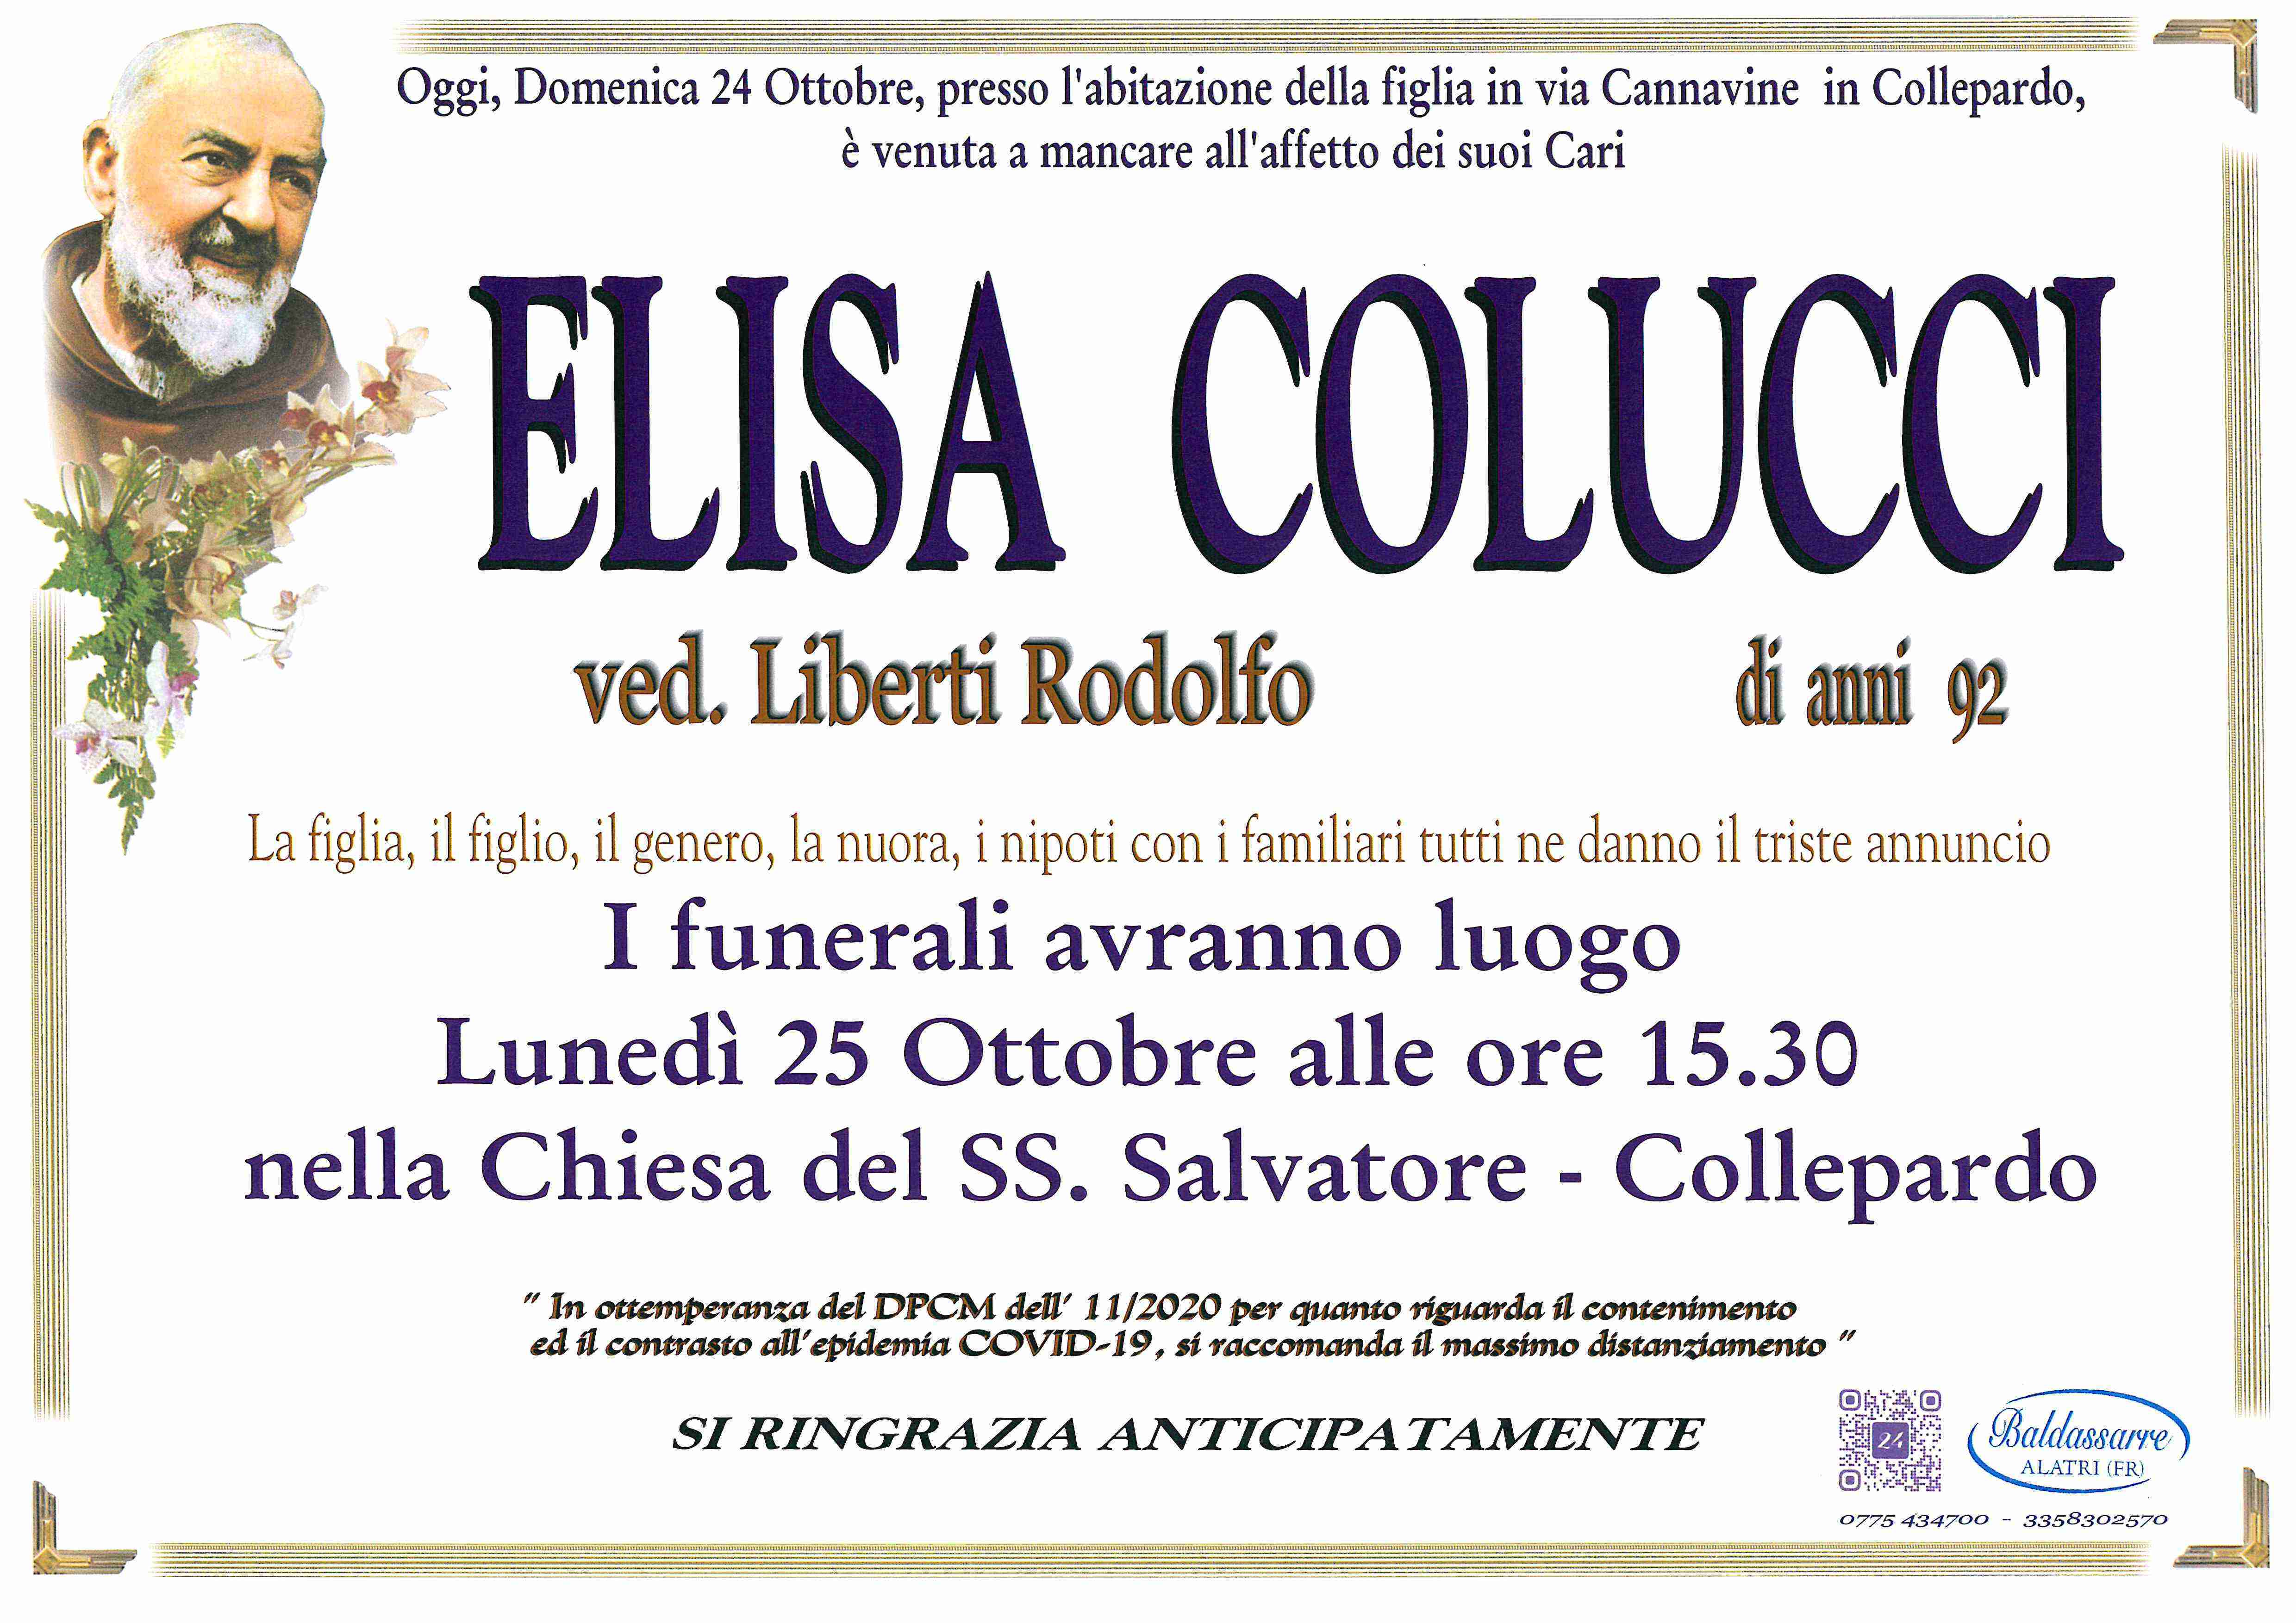 Elisa Colucci